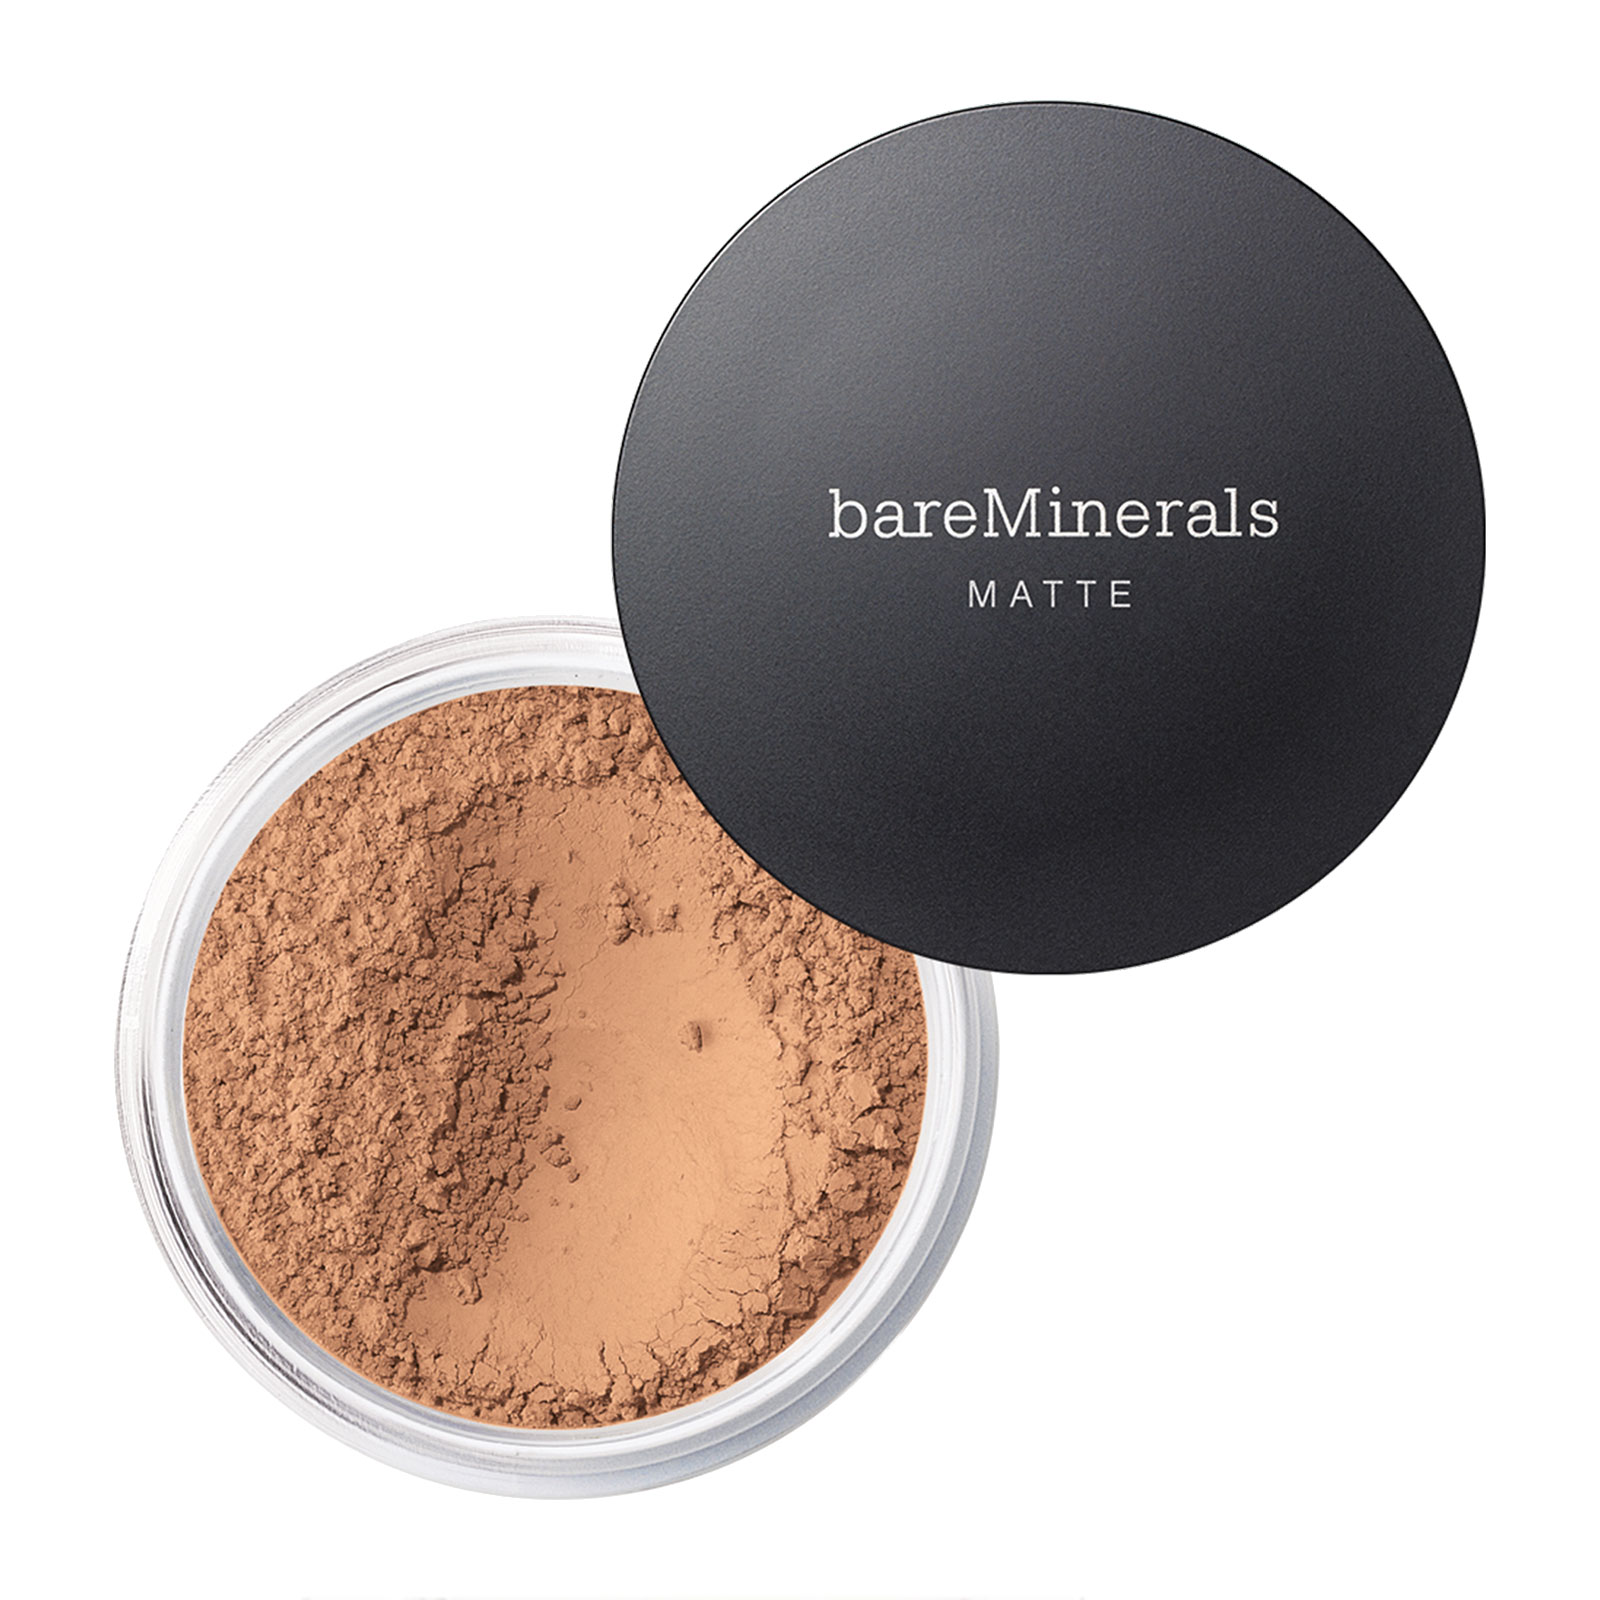 Bareminerals Matte Mineral Loose Powder Foundation Spf15 6G 18 Medium Tan (Tan, Cool/Neutral)